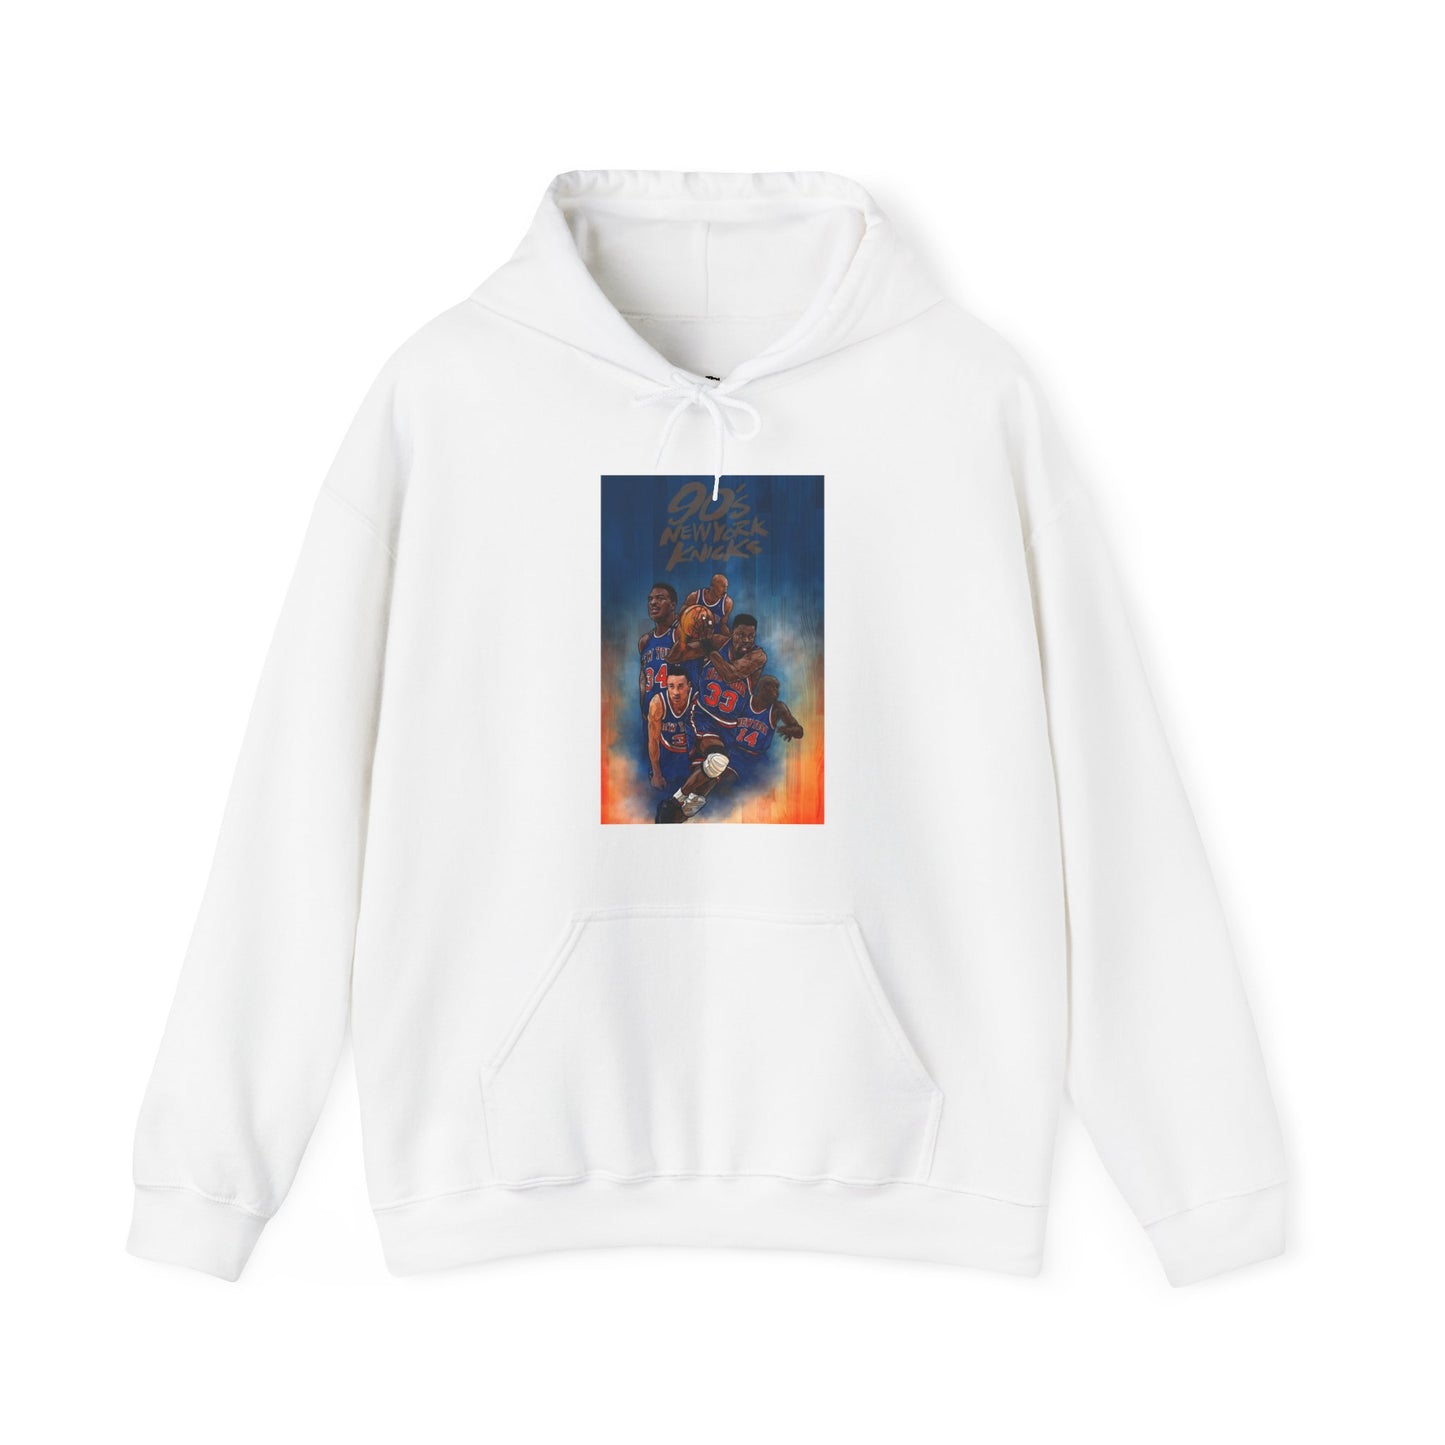 "90's Knicks" -  Hooded Sweatshirt